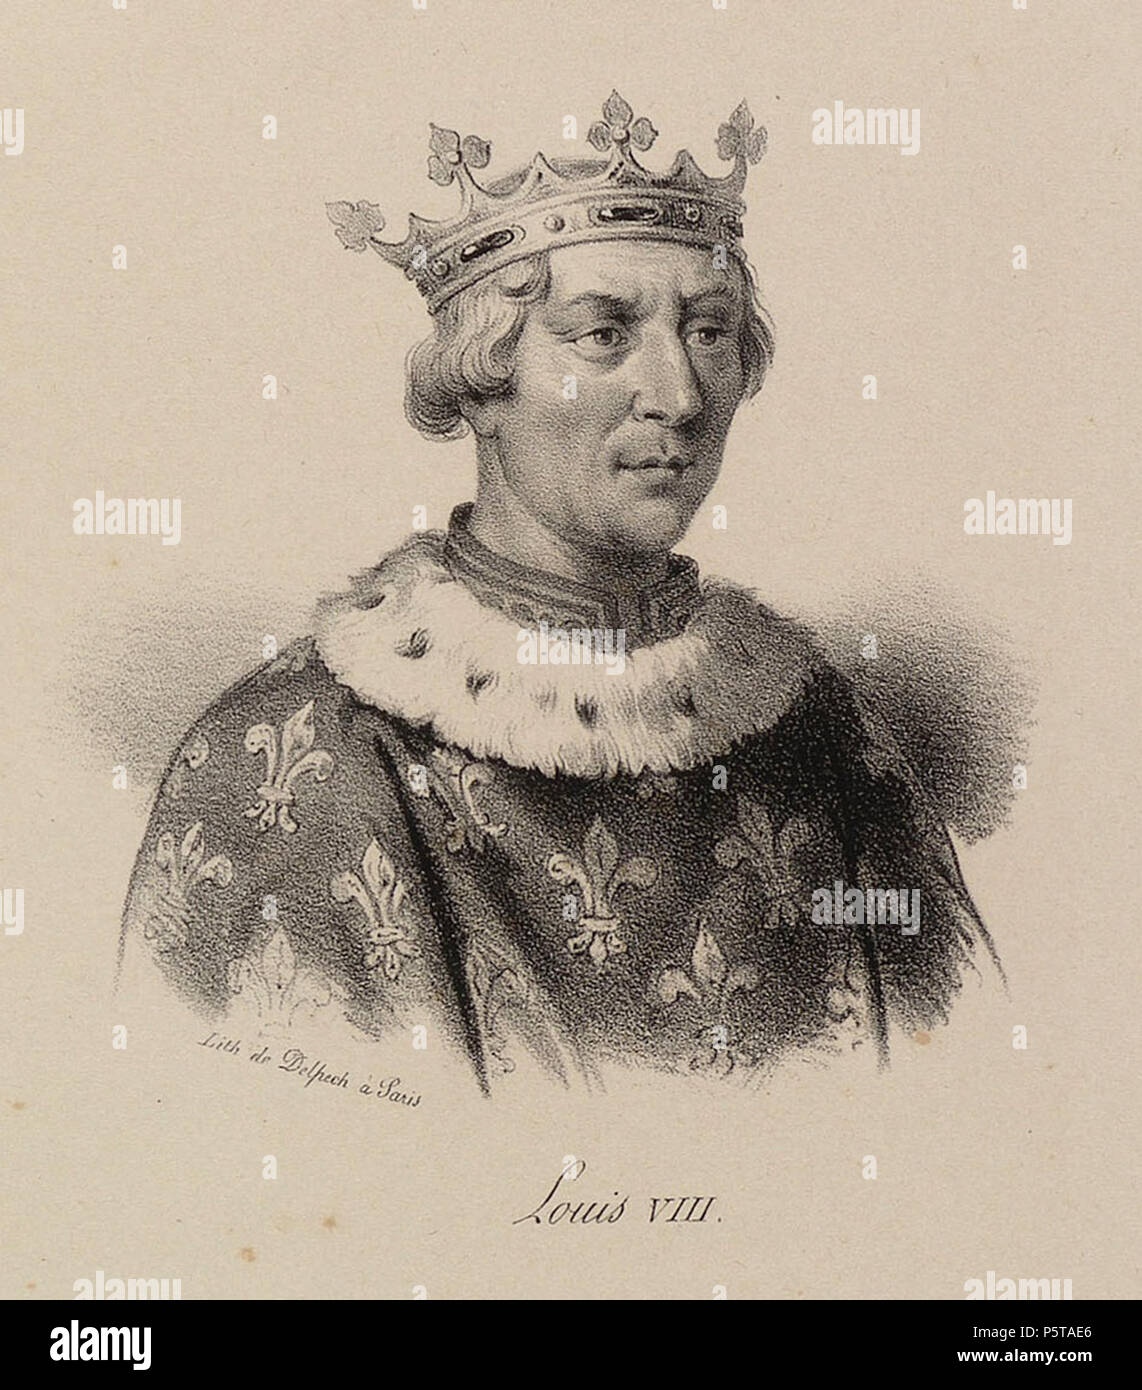 N/A. Inglés: Luis VIII de Francia (1187-1226) . Siglo xix. N/A 434 Delpech - Luis VIII de Francia Foto de stock